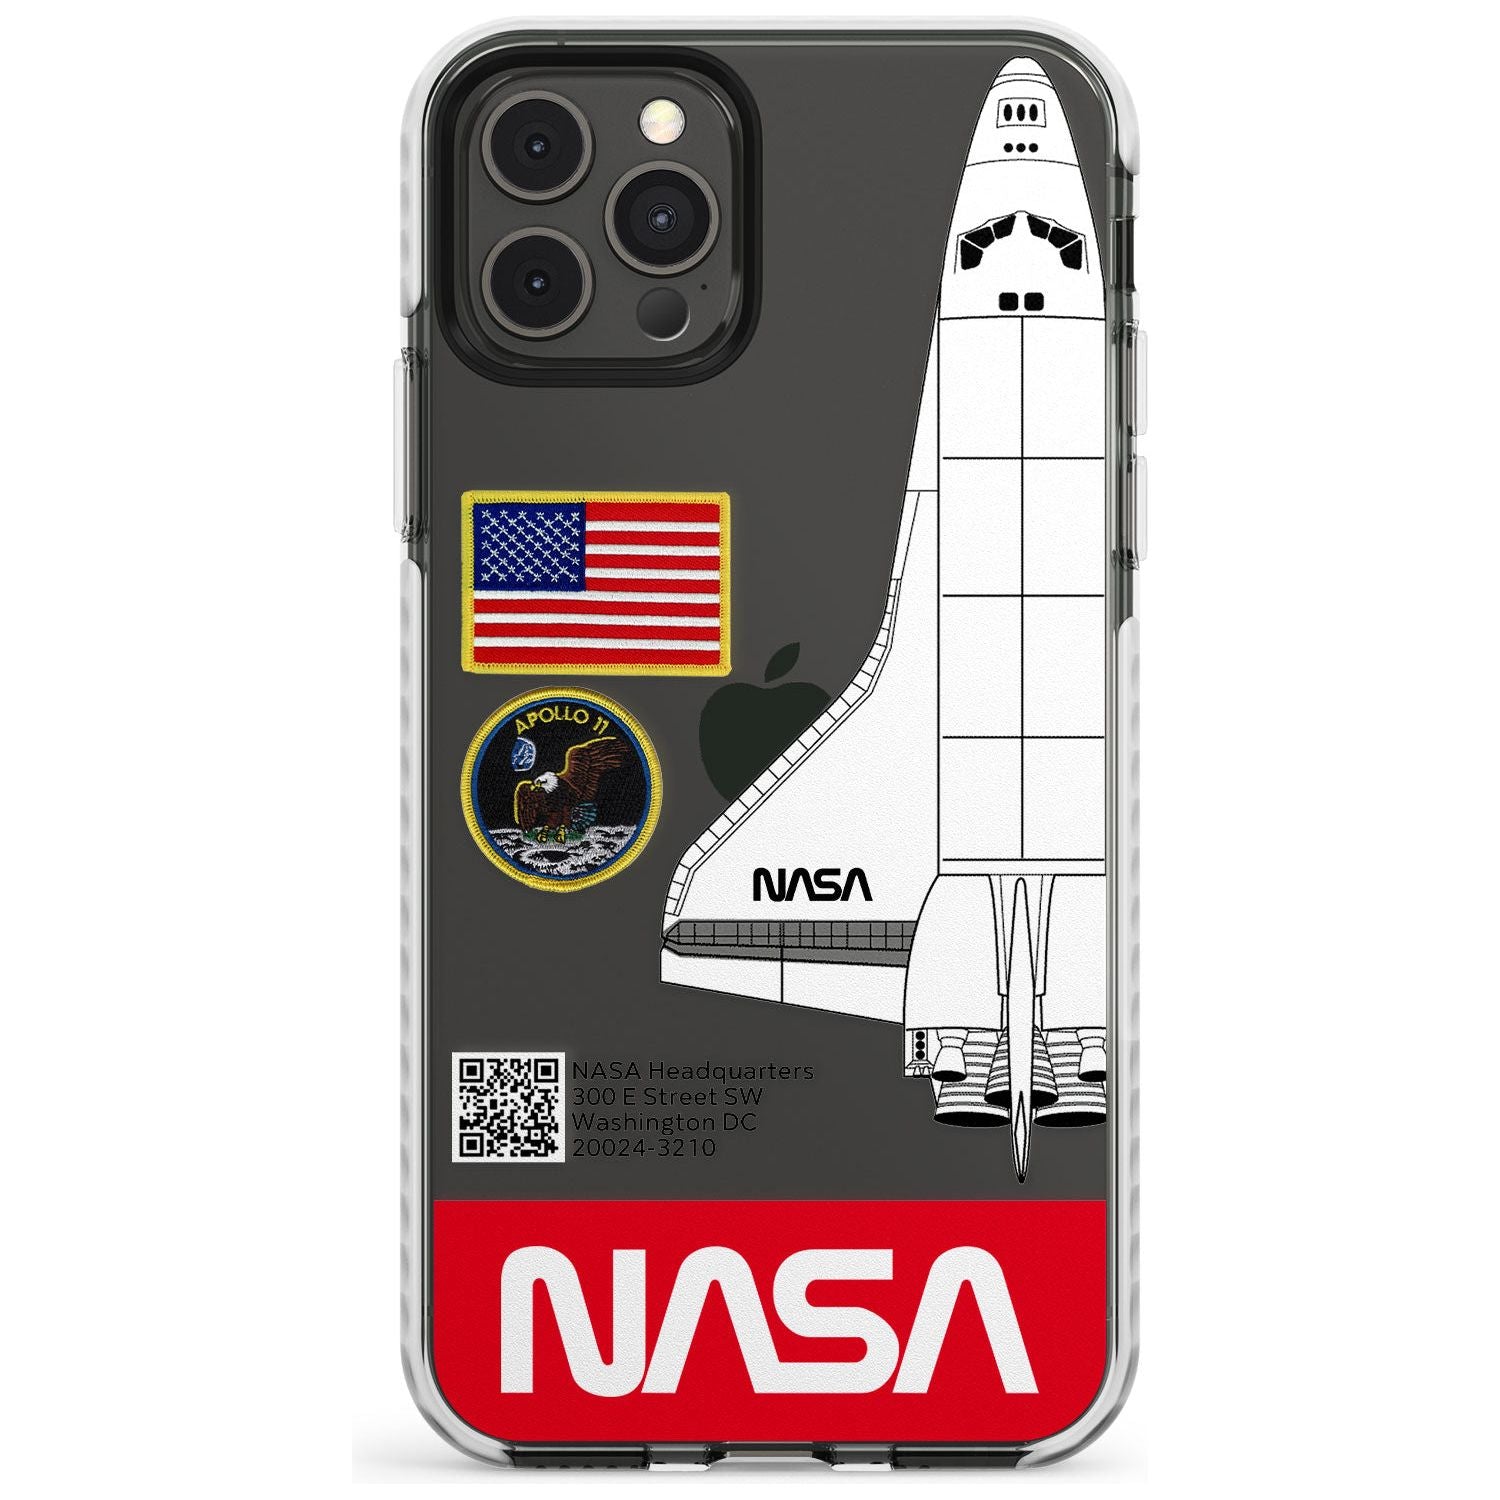 NASA Apollo 11 Impact Phone Case for iPhone 11 Pro Max